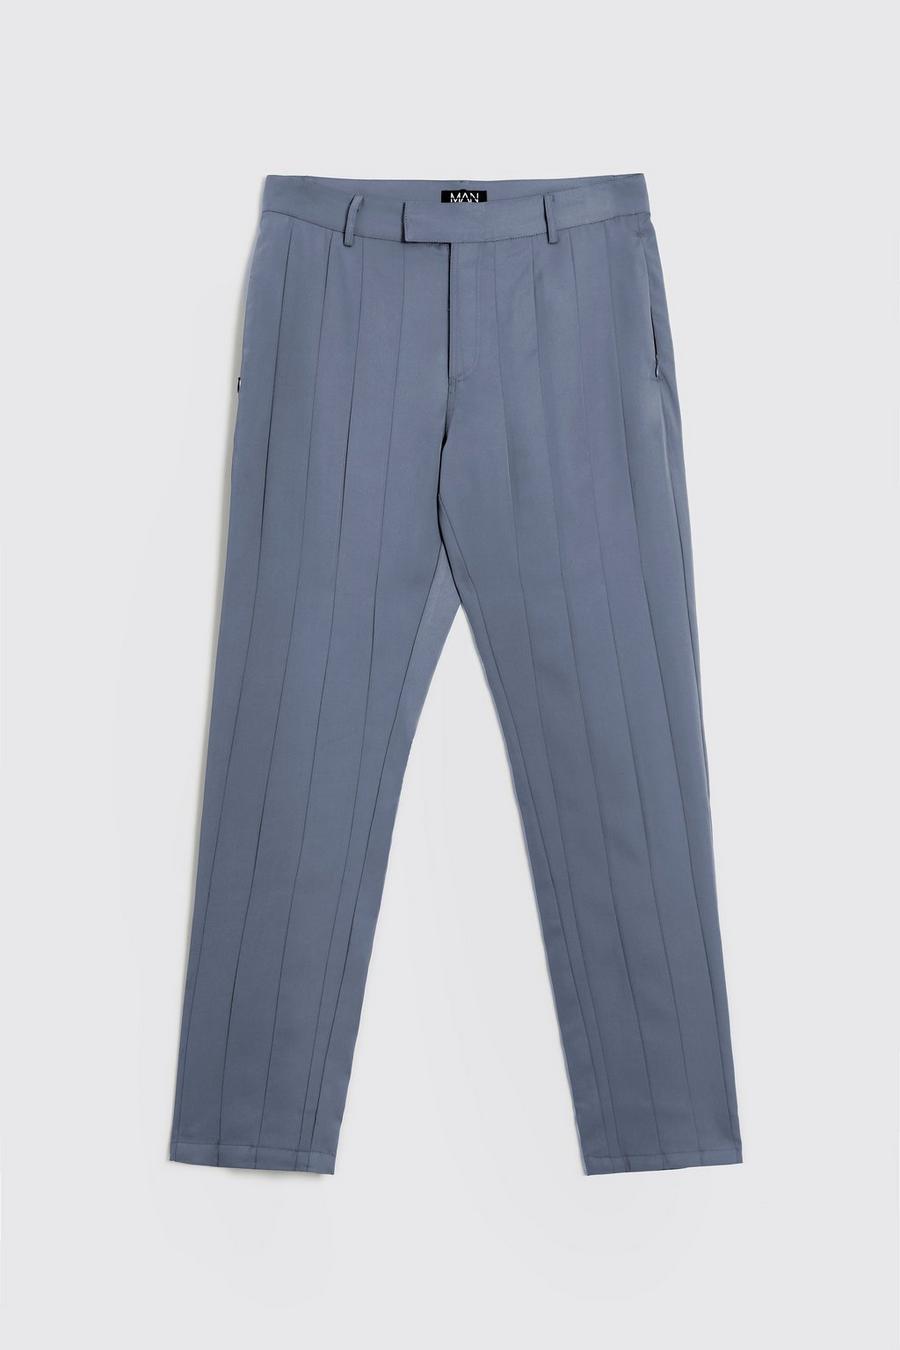 Pantalón ajustado plisado elegante, Grey gris